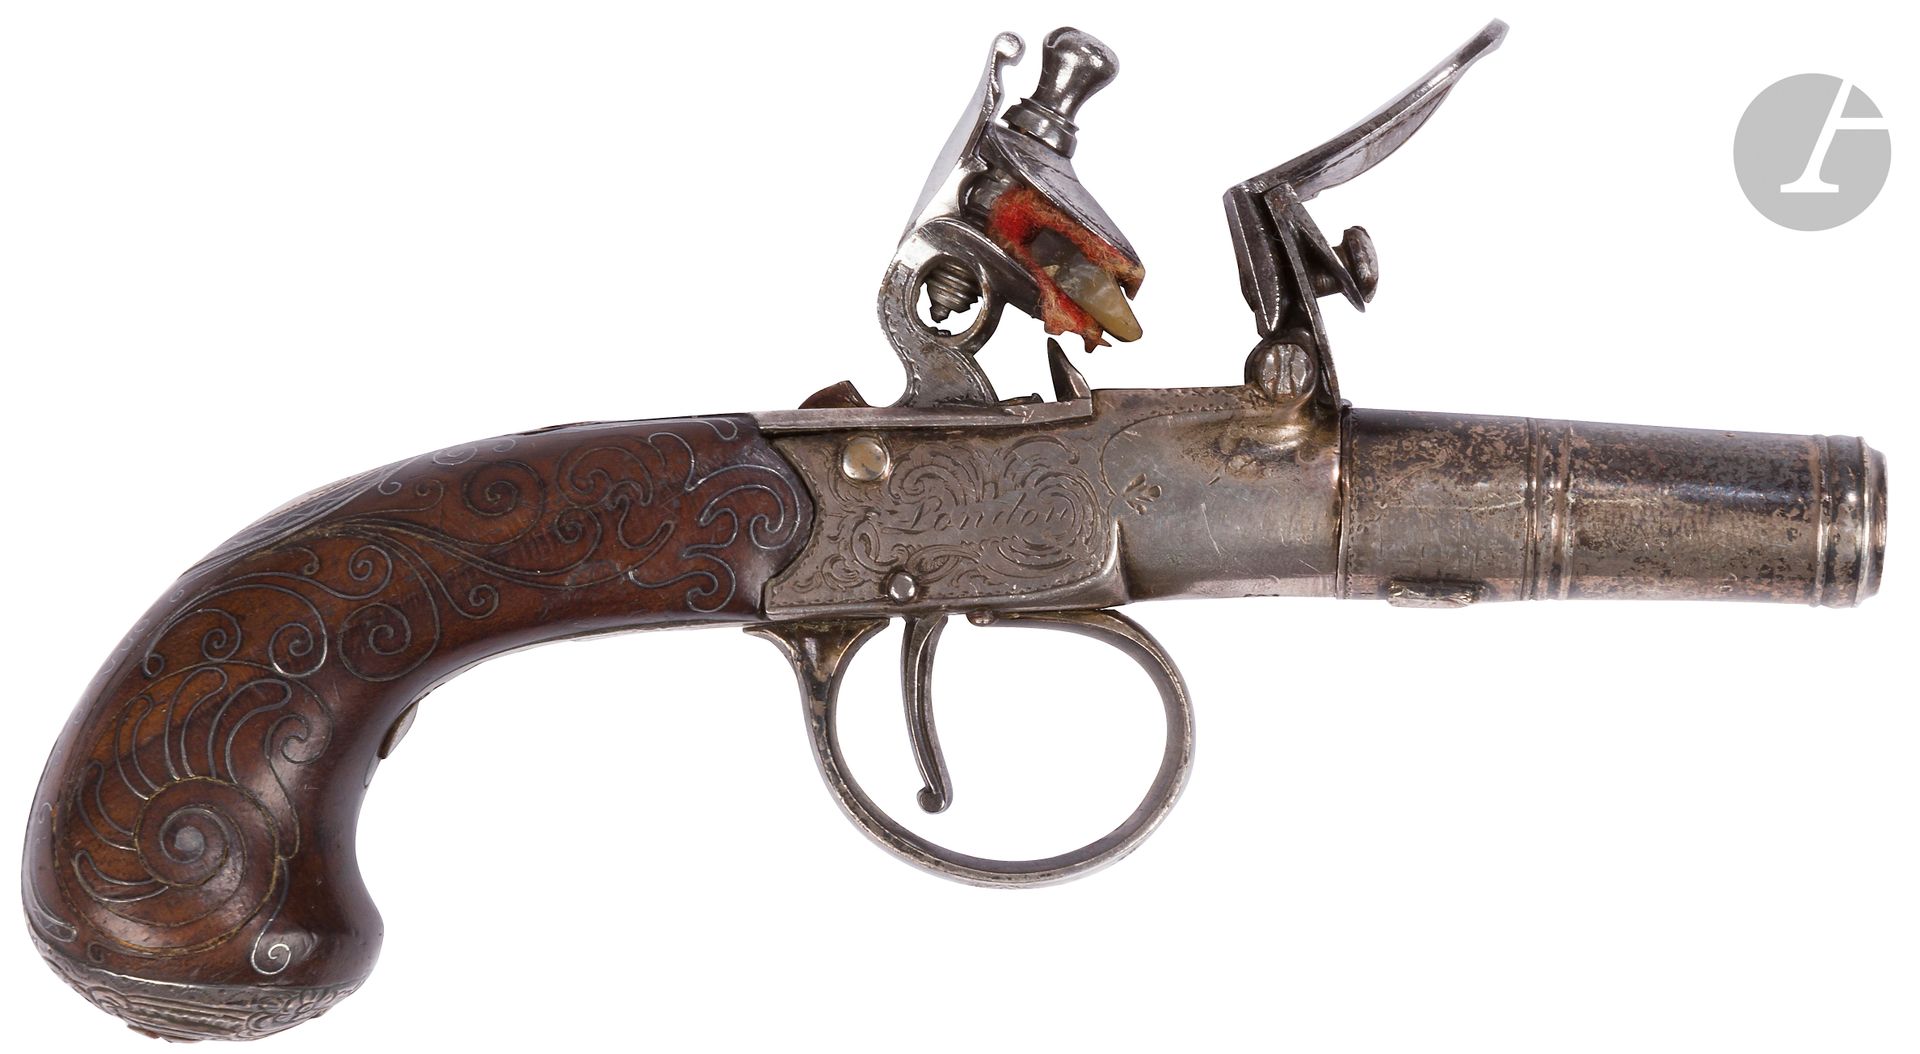 Null 小型燧发枪
圆形枪管，带强迫性子弹。刻有 "Wilson"、"London "字样的箱子。雕刻的扳机护罩。镂空的银质鞍座。
公元前约1780年。